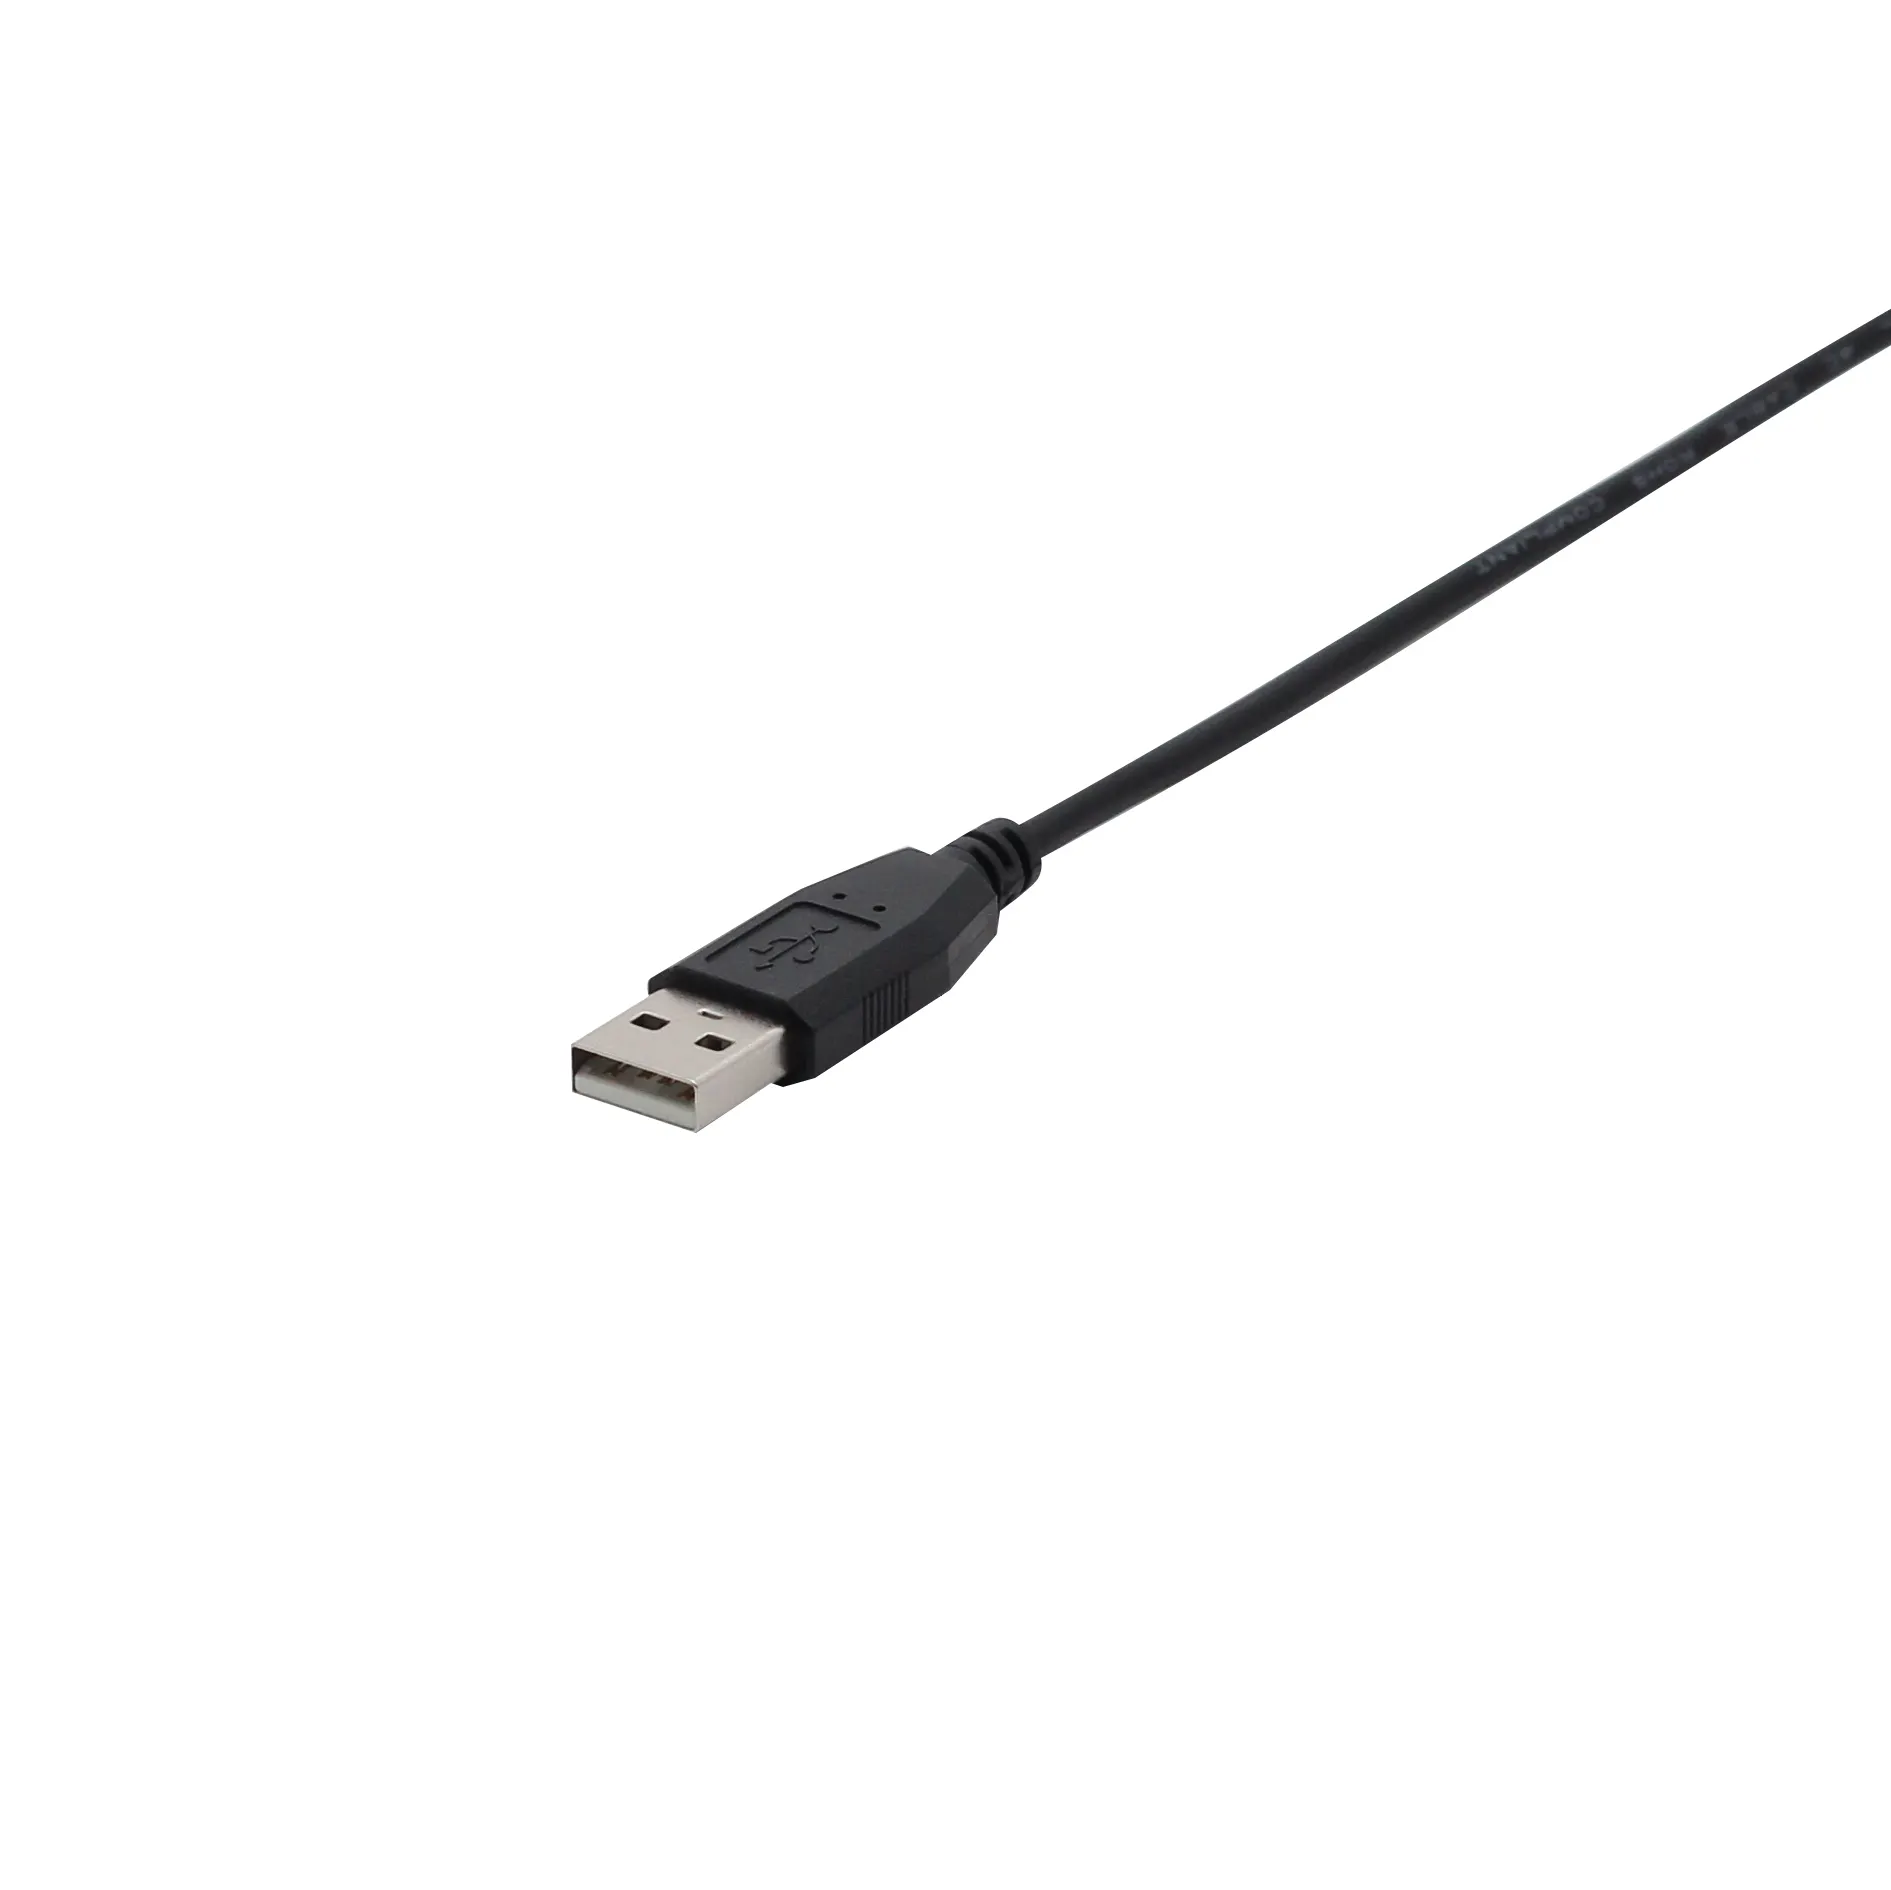 Kabel USB type-a USB2.0 ke PS/2 Mini Din, adaptor 6-pin dengan IC bawaan PS2 ke kabel konverter USB